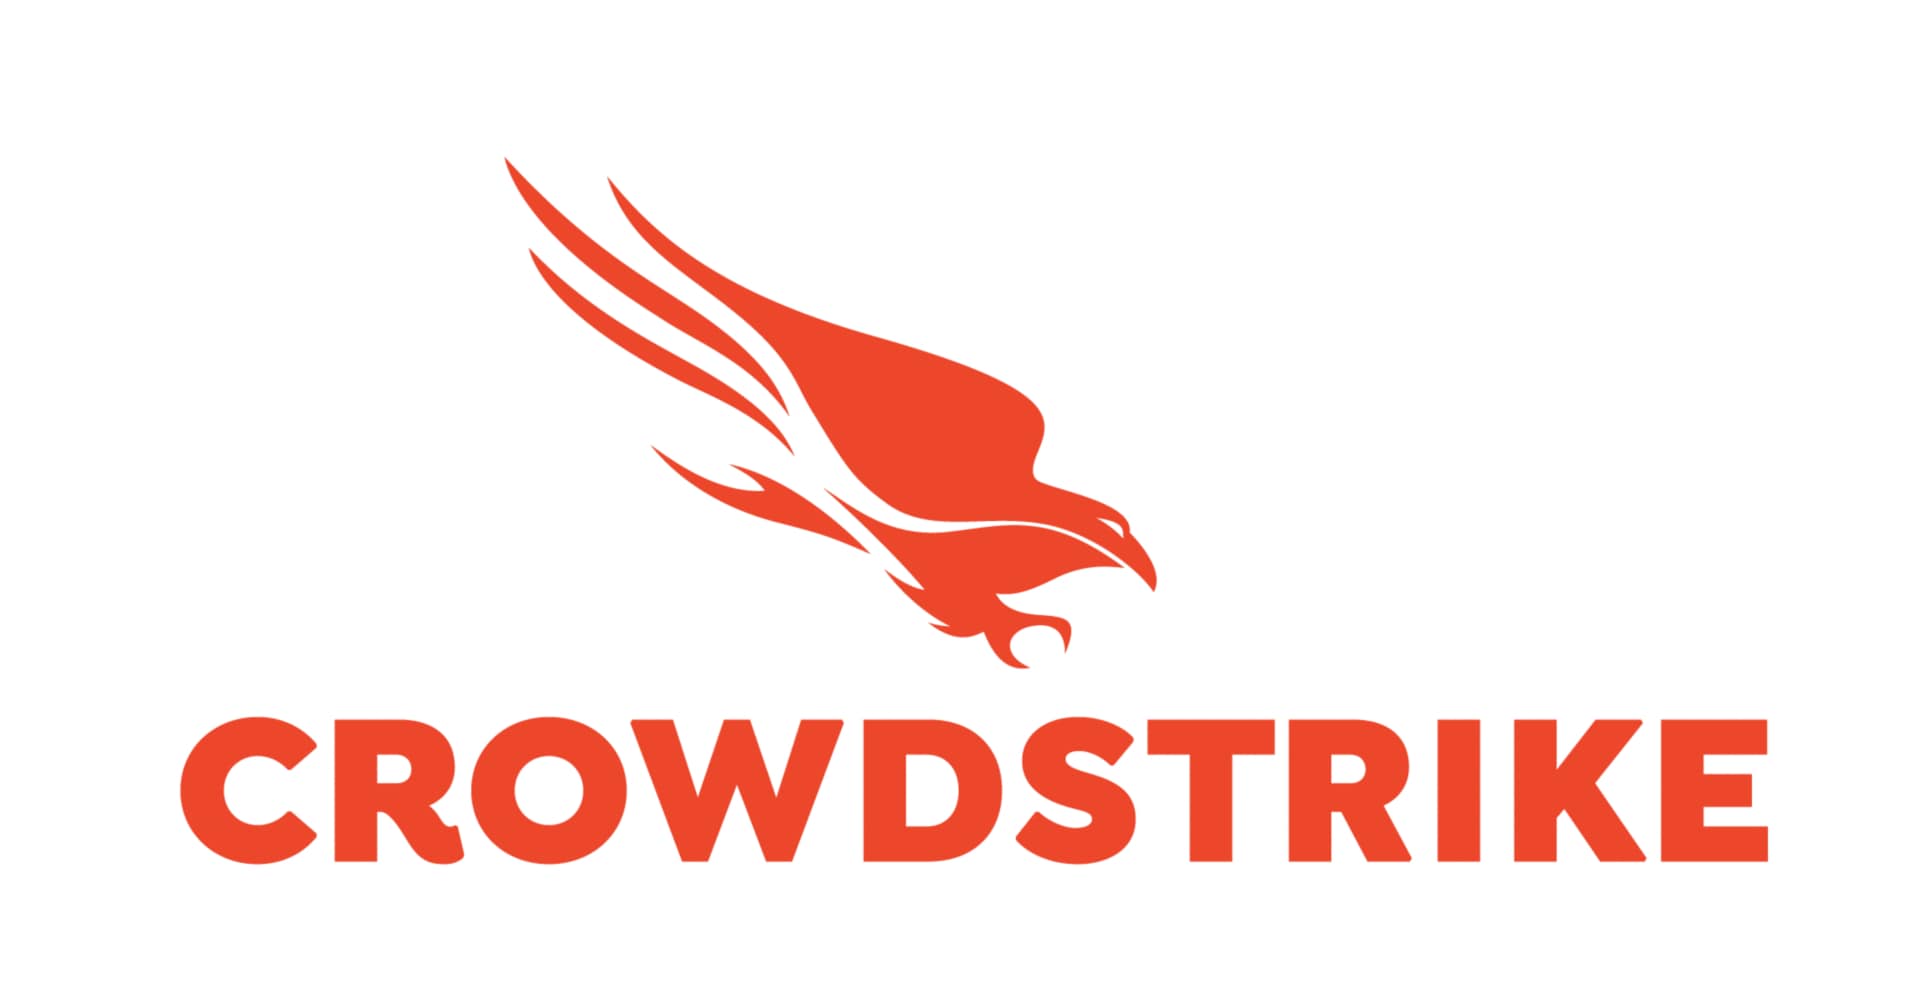 CrowdStrike 8-Month Falcon Firewall Management Bundle Promo Software